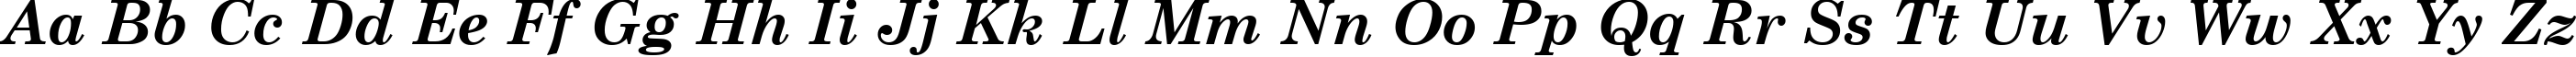 Пример написания английского алфавита шрифтом Century Schoolbook Bold Italic